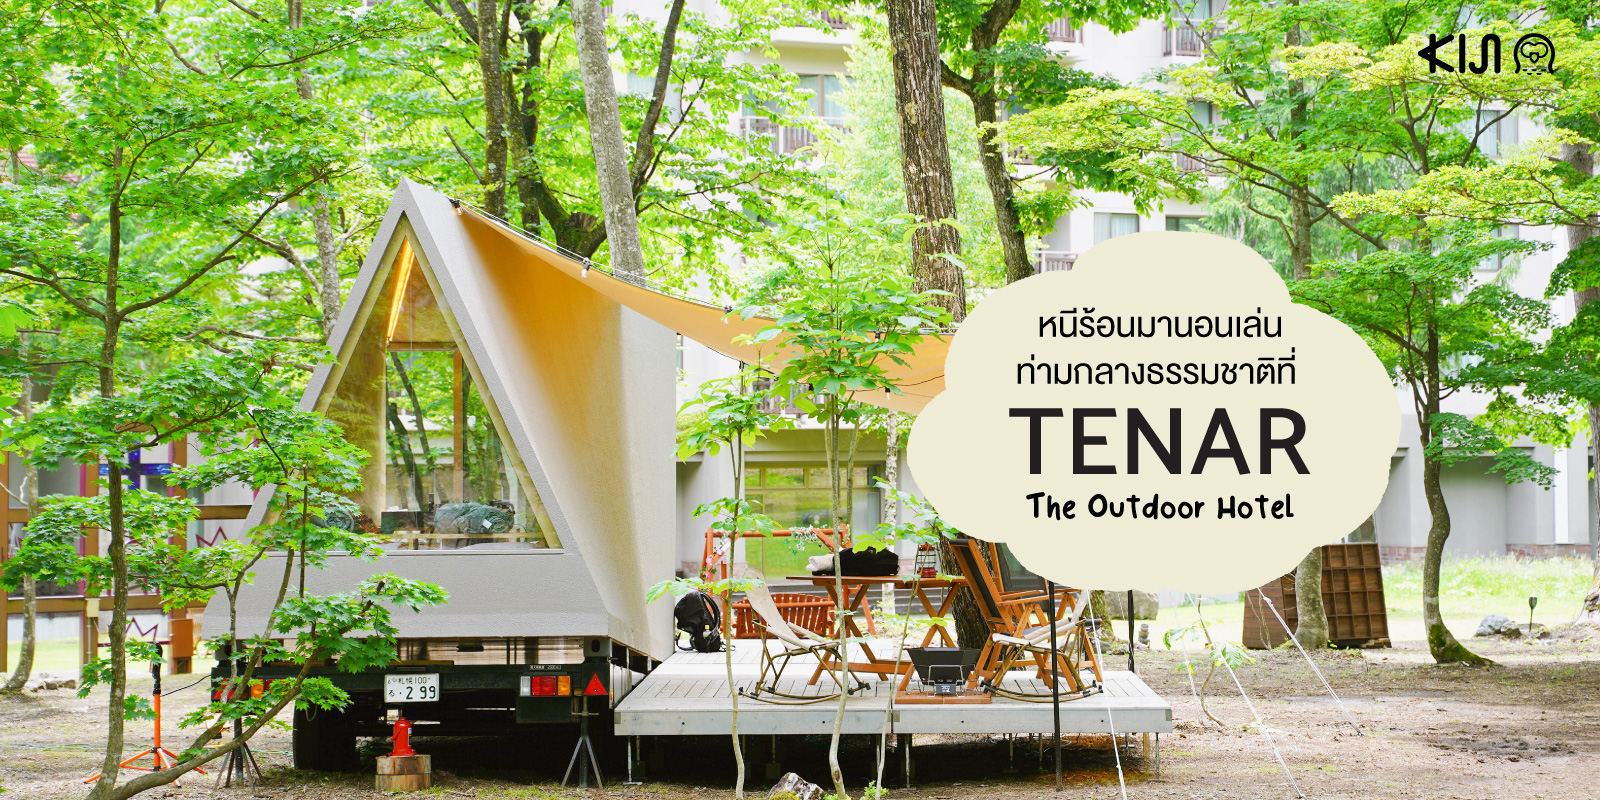 TENAR The Outdoor Hotel : ที่พักกลางธรรมชาติแบบส่วนตัวที่นากาโน่